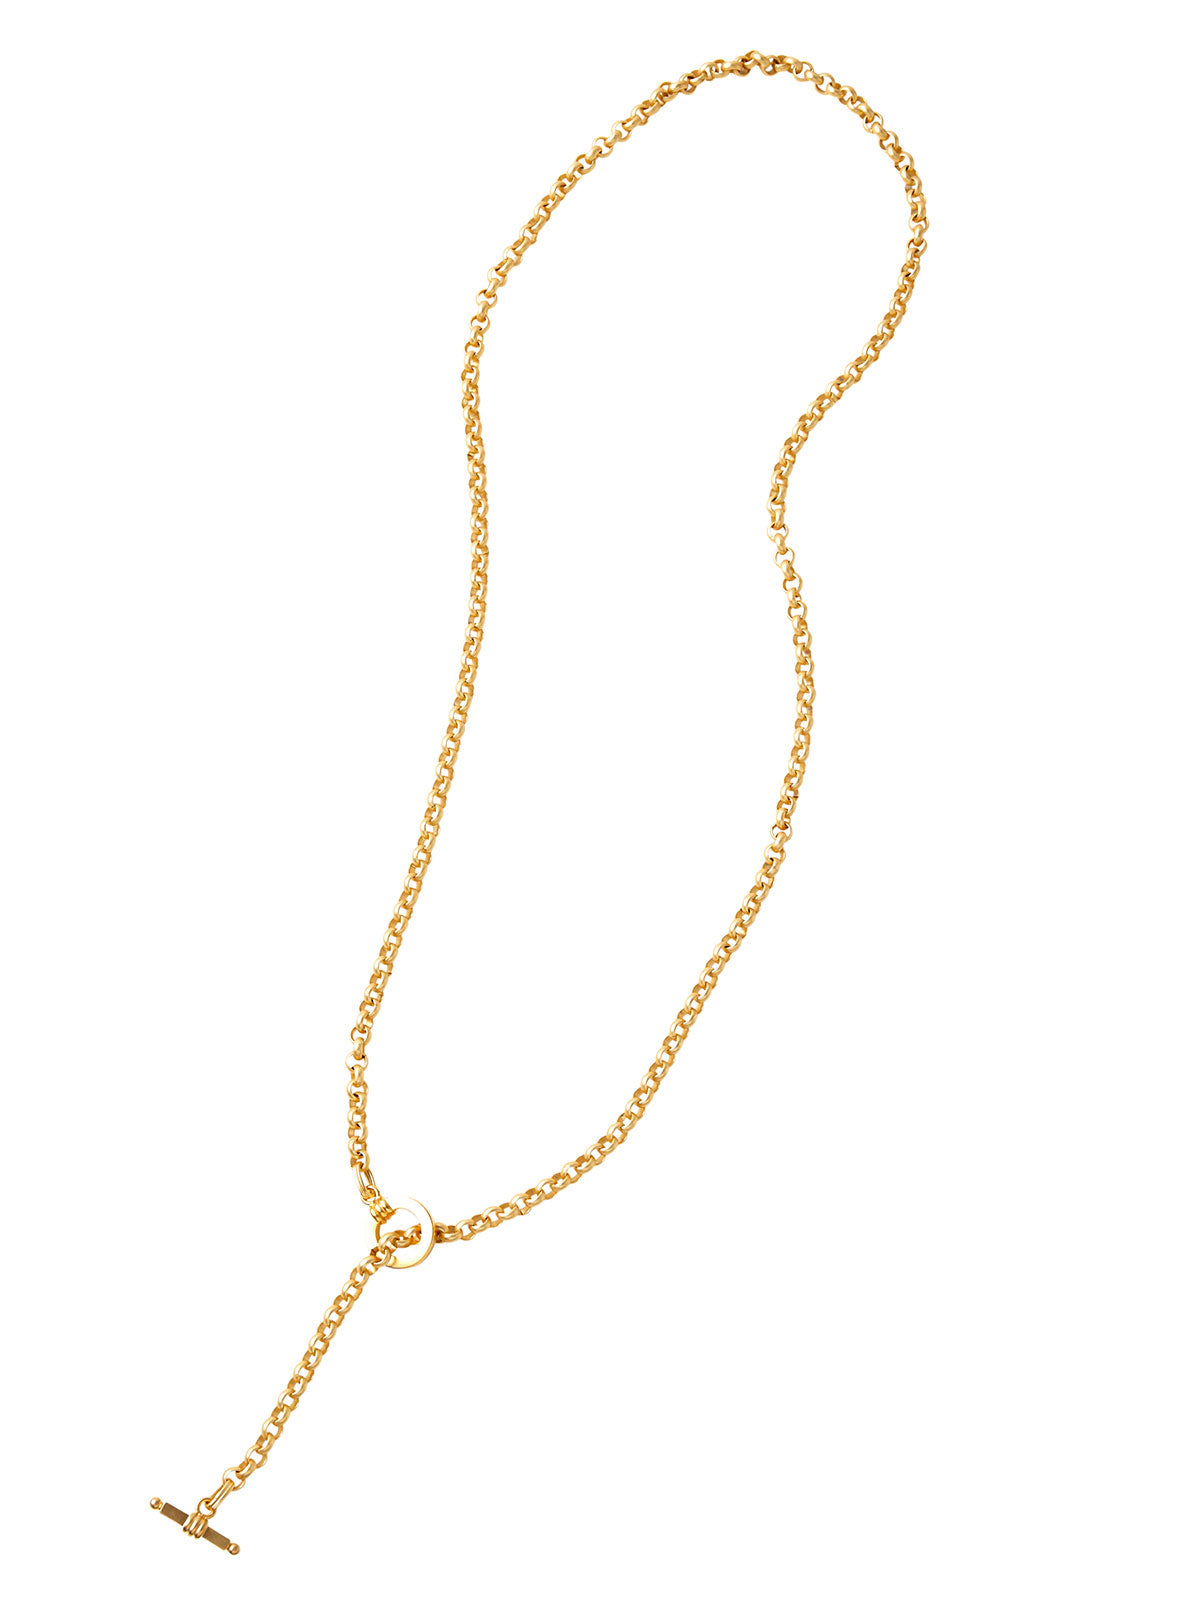 Matte Gold Rolo Chain Toggle Pendant Necklace